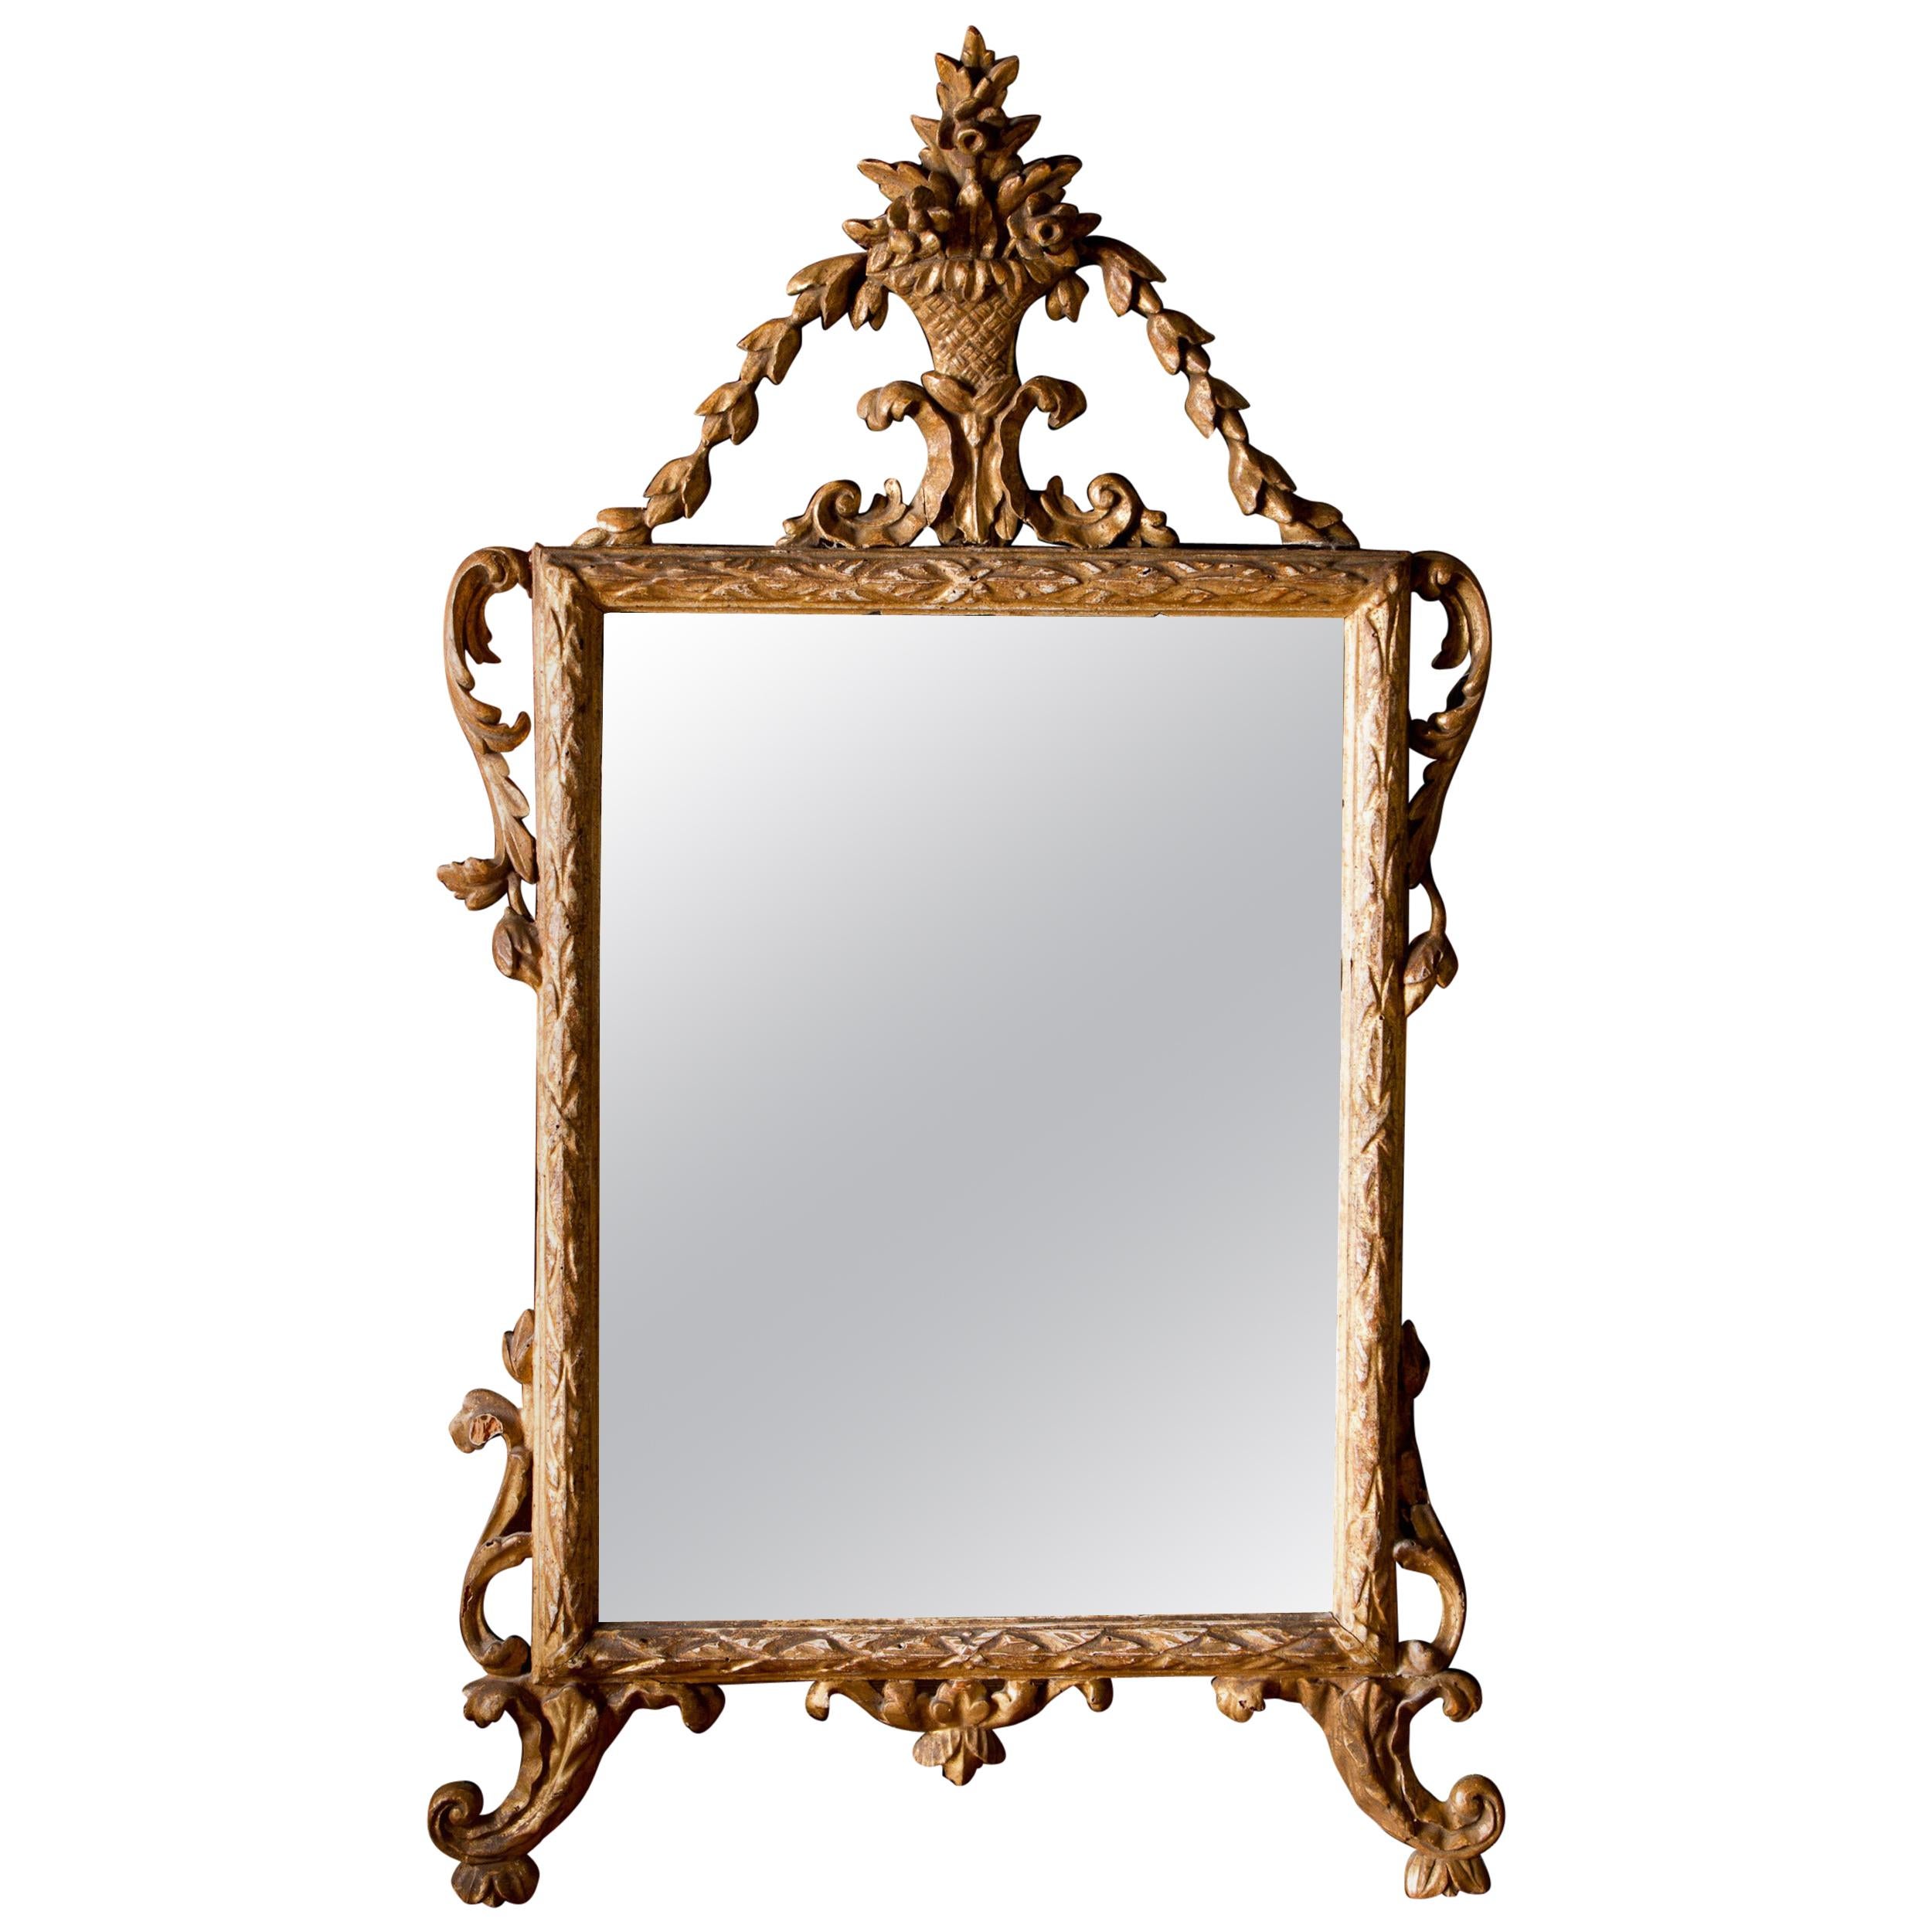 Italian Neoclassical Mirror